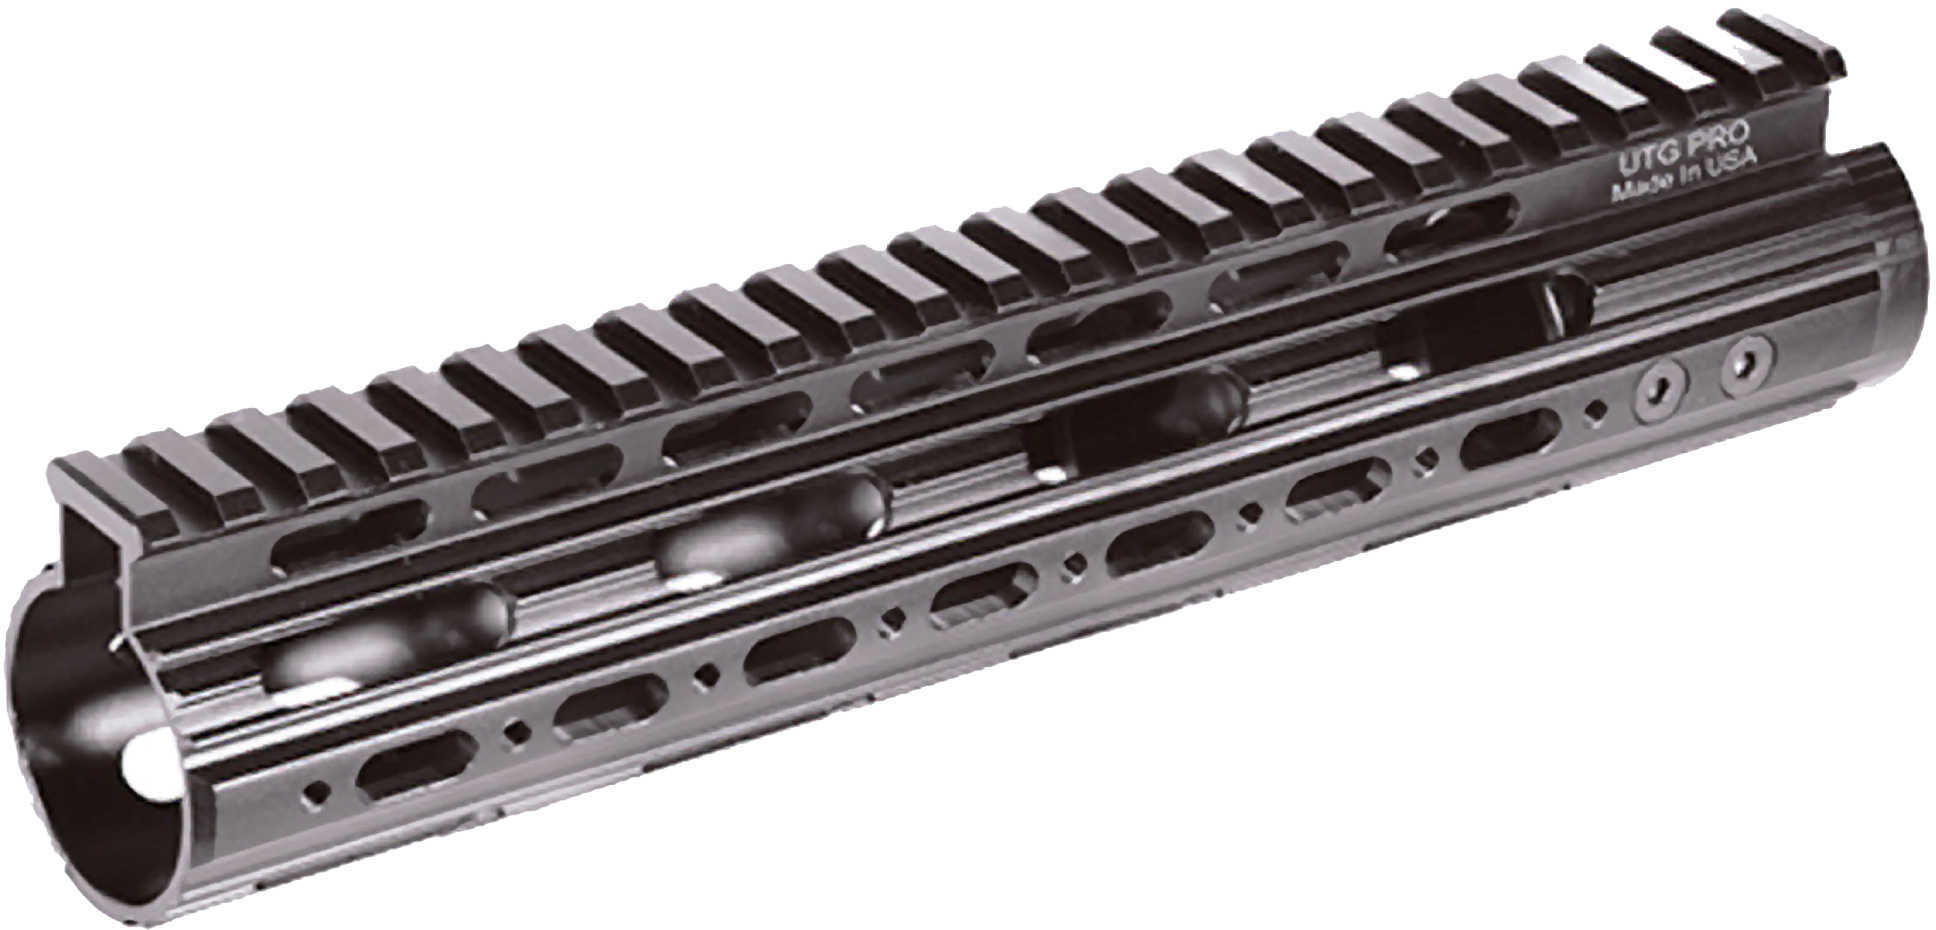 Leapers Inc. - UTG Rail System 9" for AR Rifles Mid Length Super Slim Free Float Handguard Black Finish MTU004SS